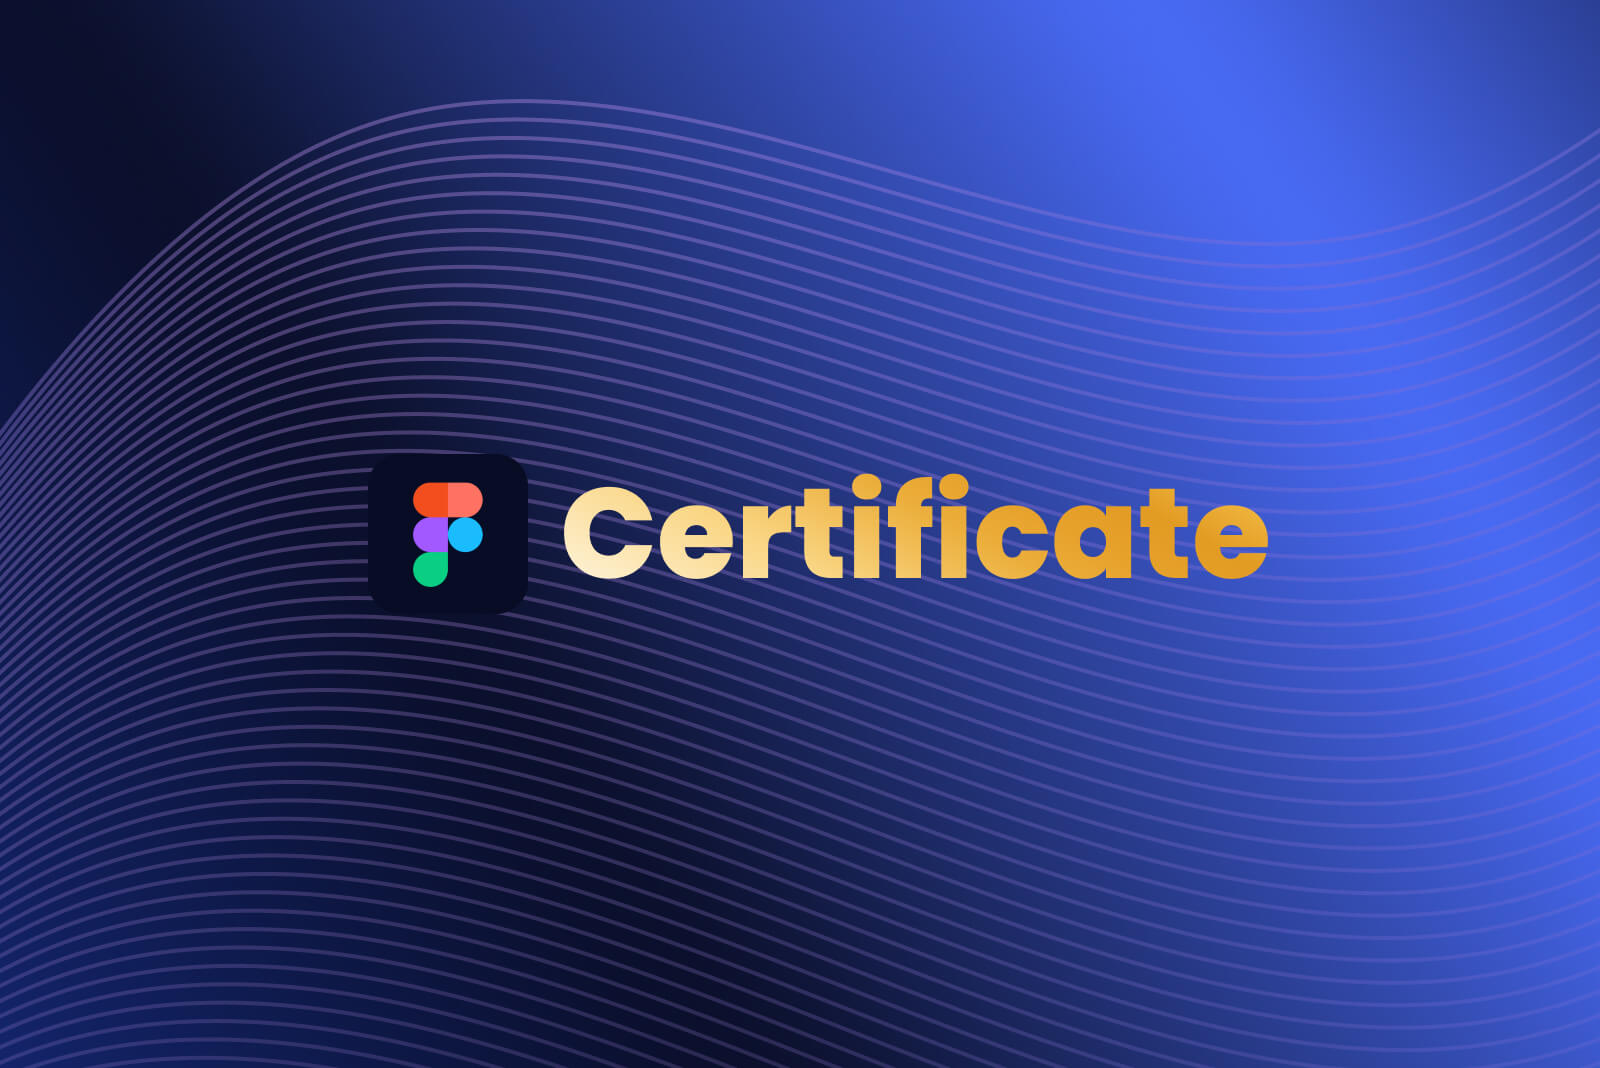 Figma certificate